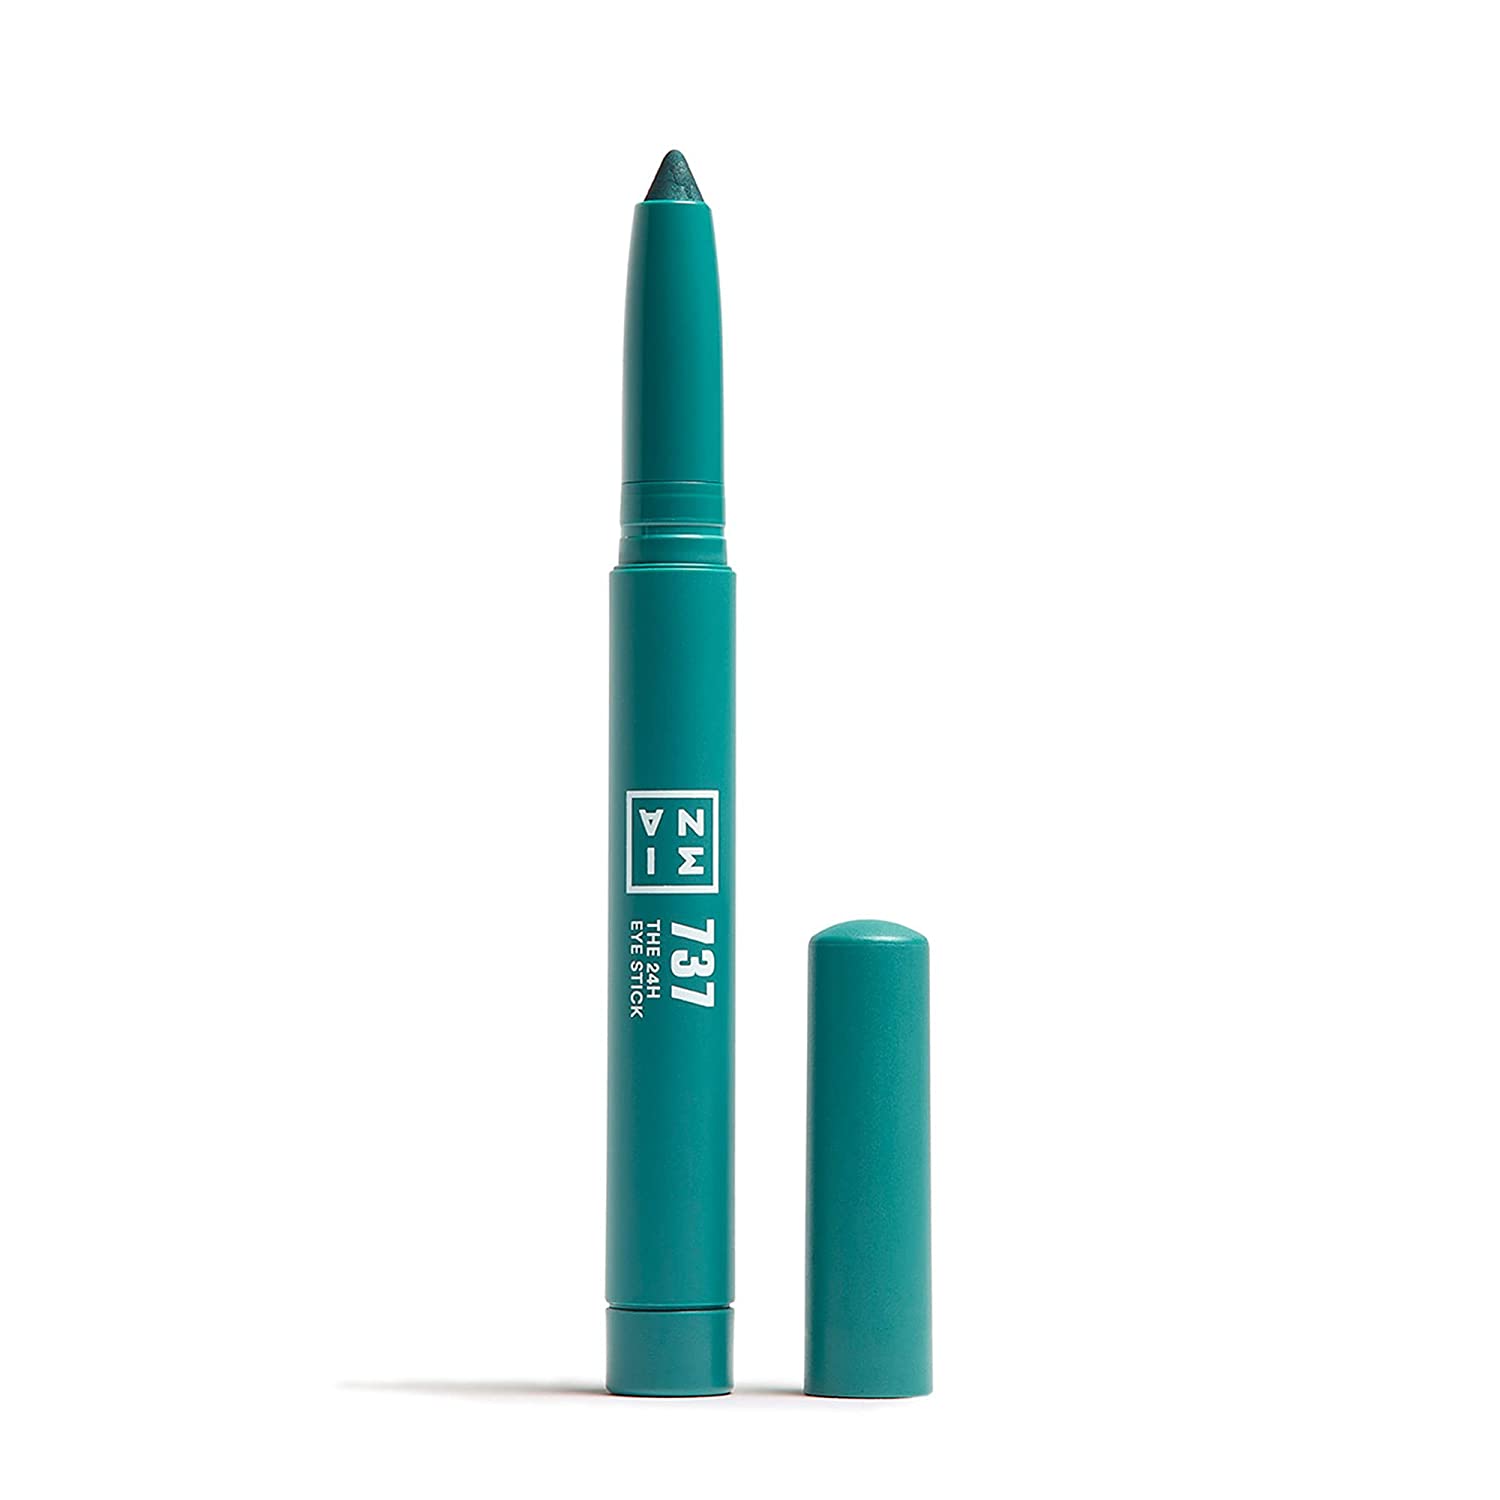 3INA MAKEUP - Vegan - Cruelty Free - The 24H Eye Stick 737 - Green - 24H Waterproof Formula - Creamy Texture - Eyeshadow Pen - Highly Pigmented - Quick Drying - Matte Shimmer Metalic, ‎green